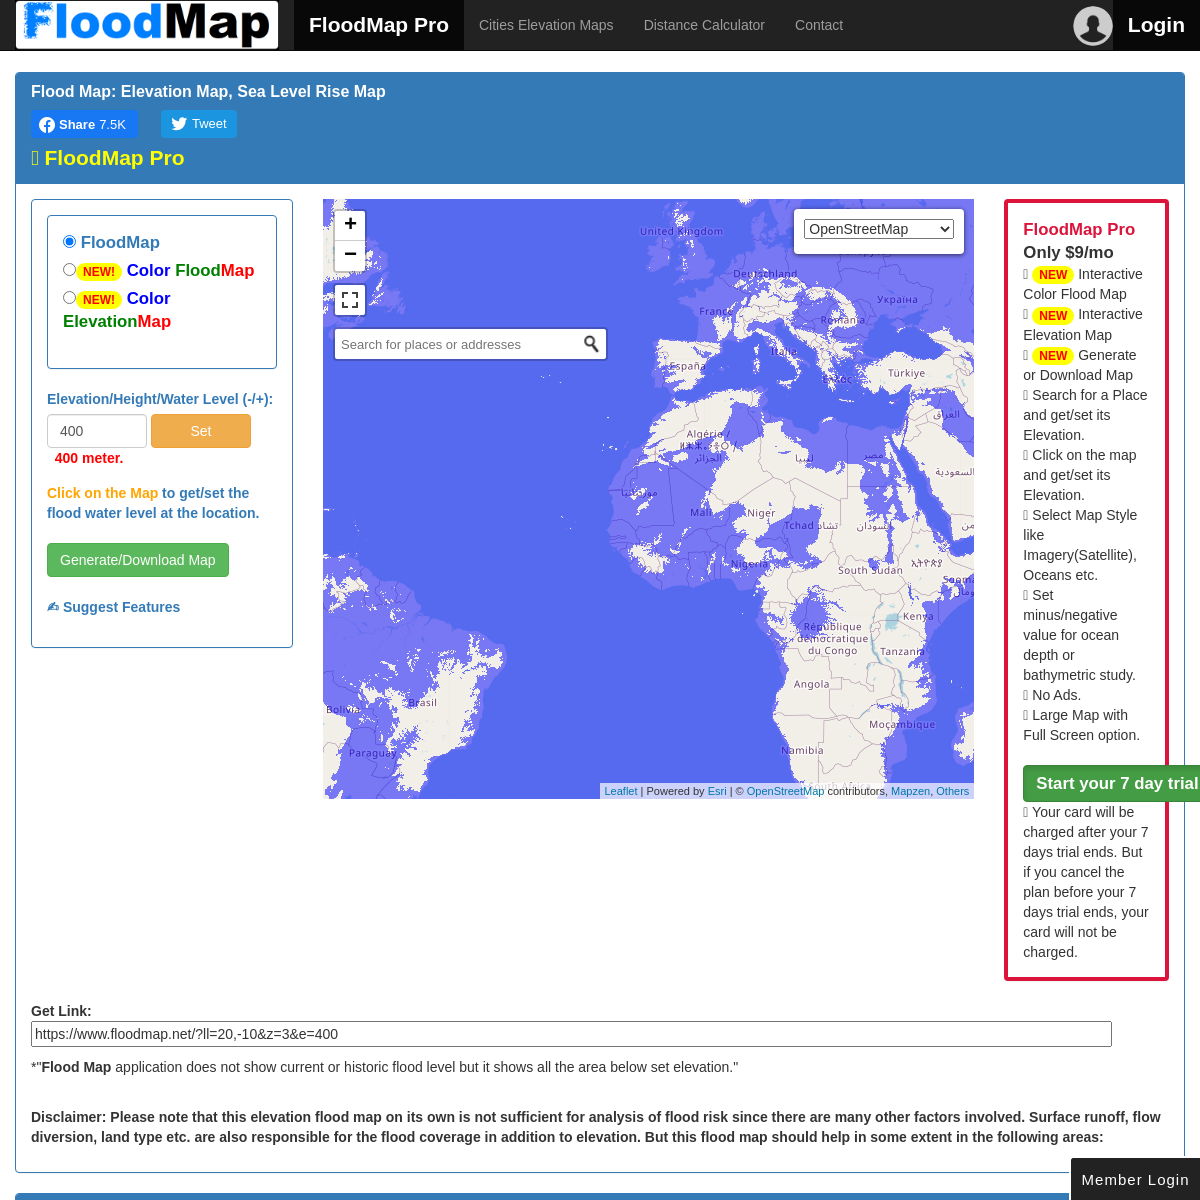 A complete backup of floodmap.net